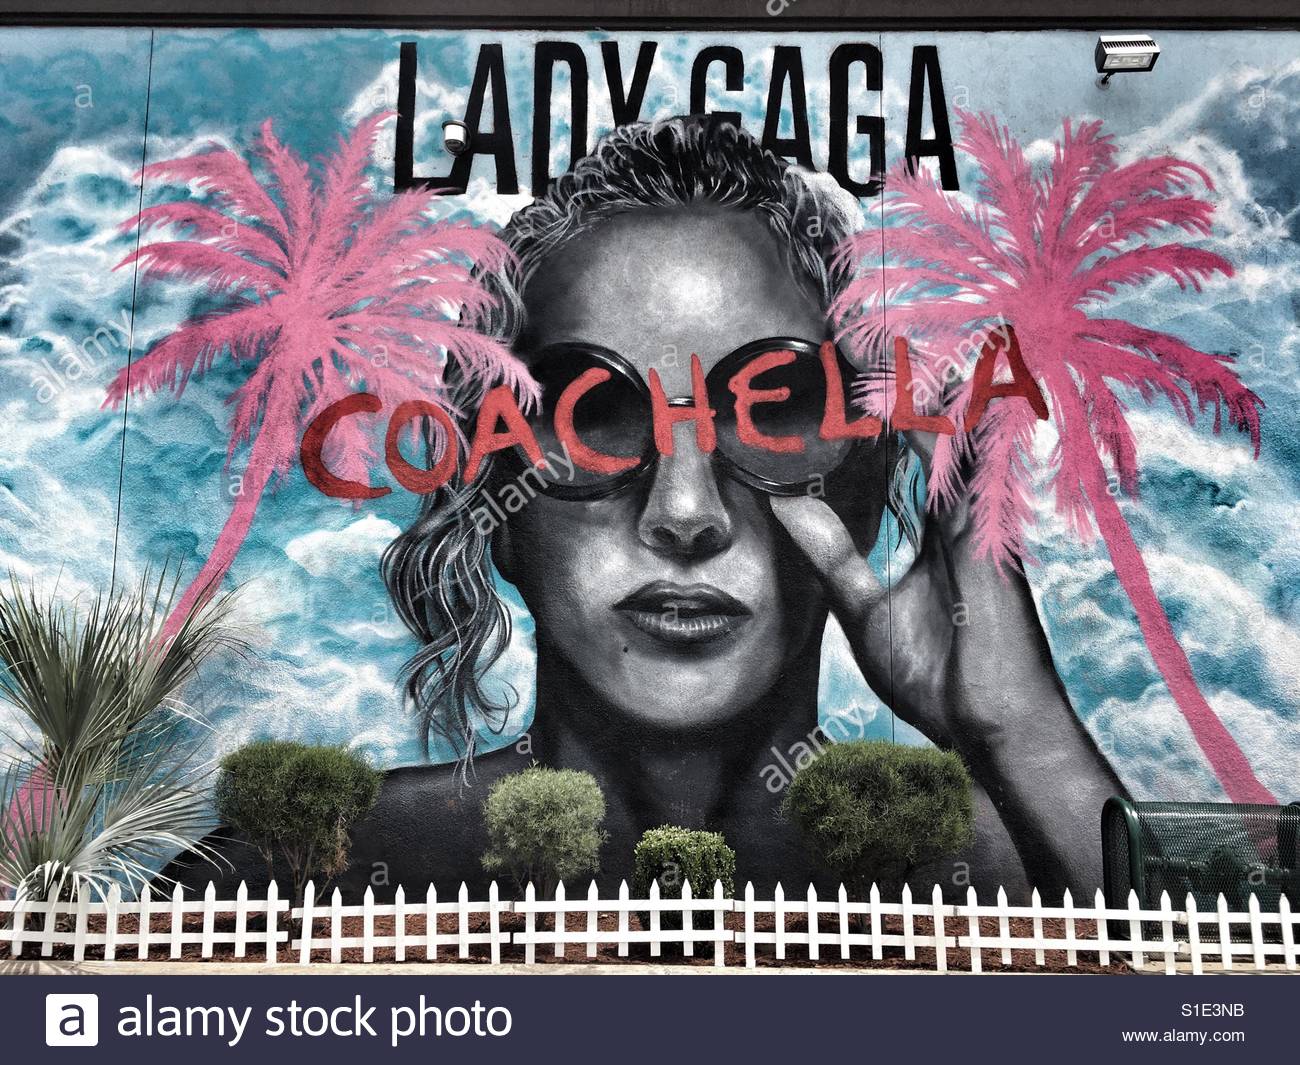 lady-gaga-mural-for-coachella-music-fest